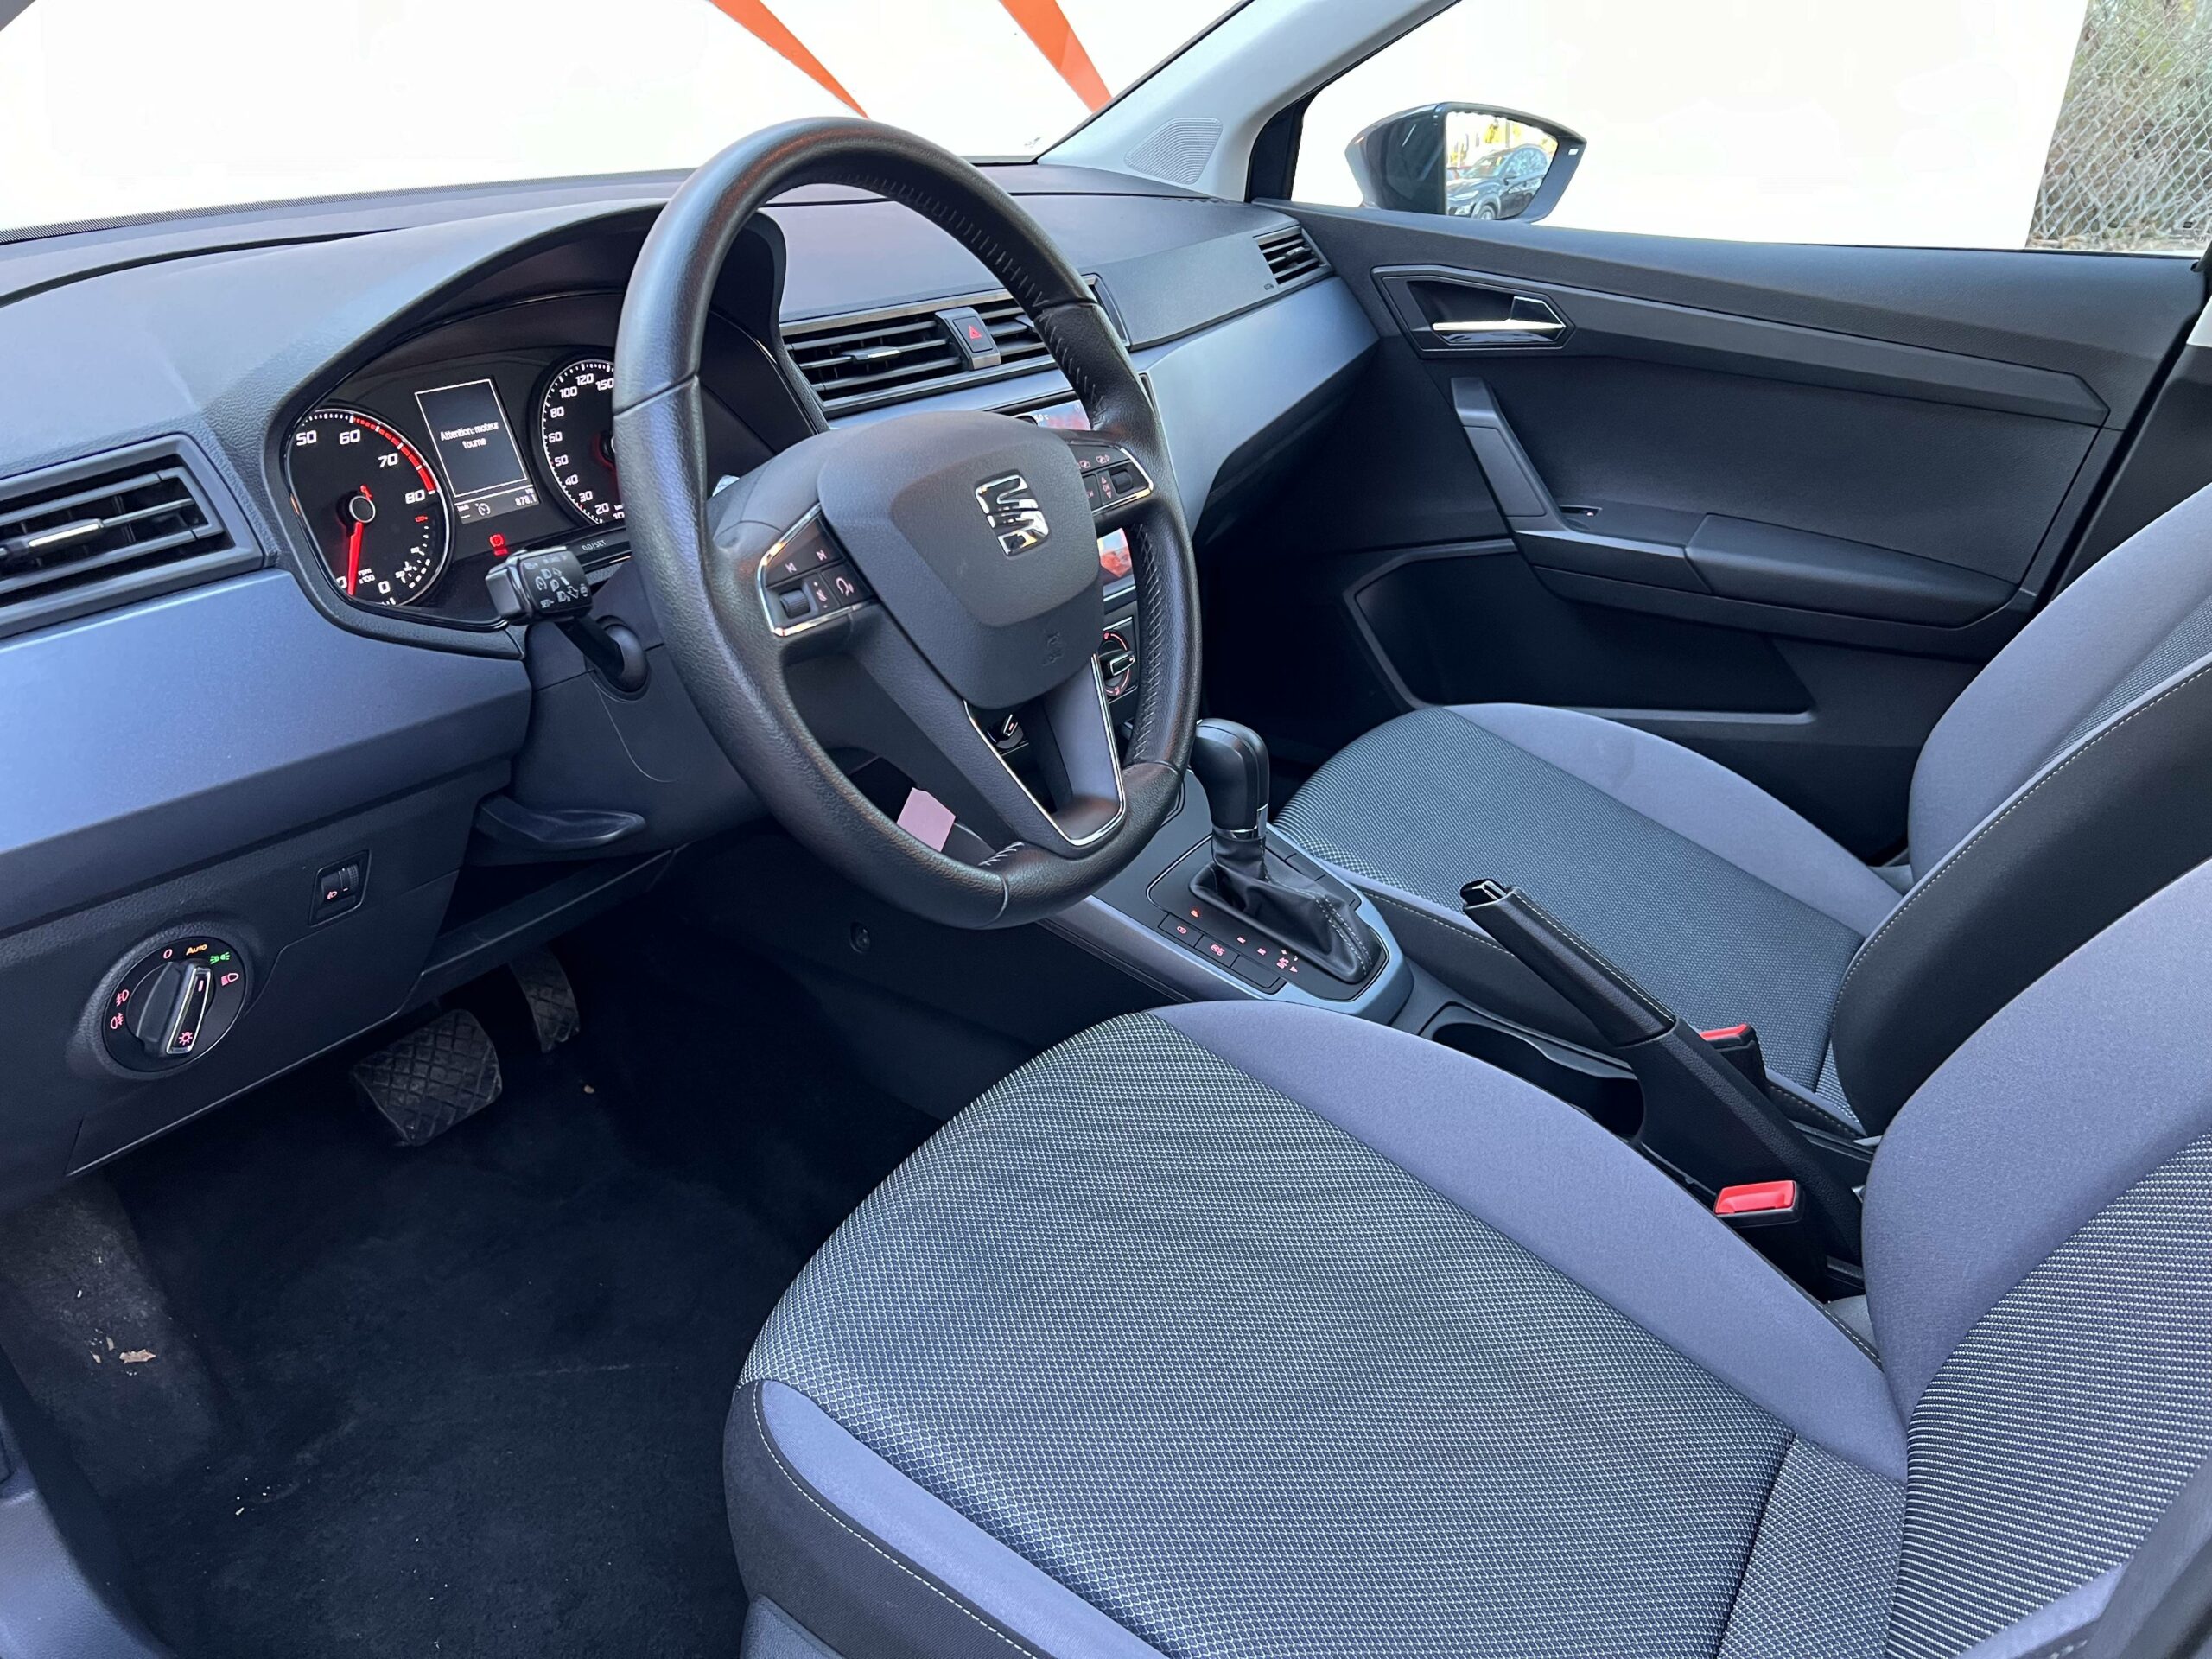 SEAT Arona 1.0 TSI 110 ch Start/Stop DSG7 – Finition Style – Occasion –  3564817790 – Roure Automobiles